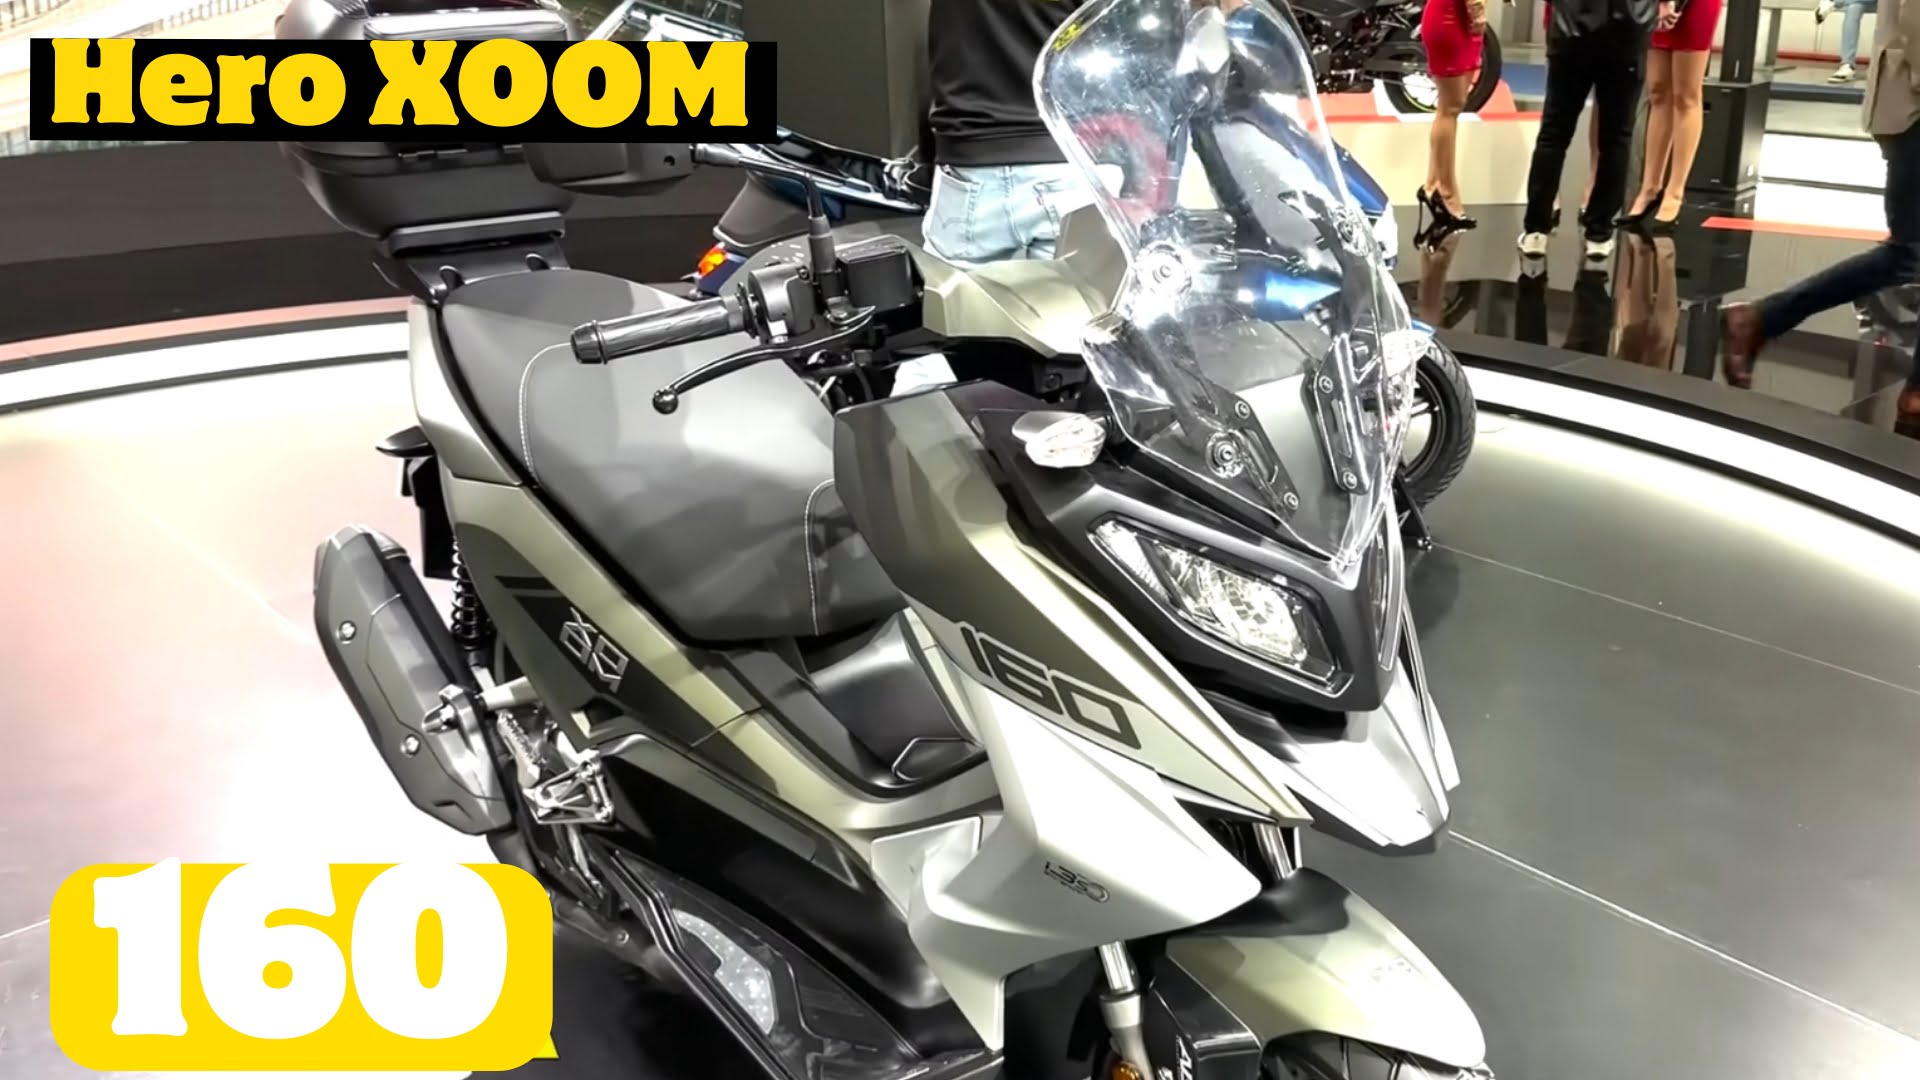 Hero XOOM 160 scooter